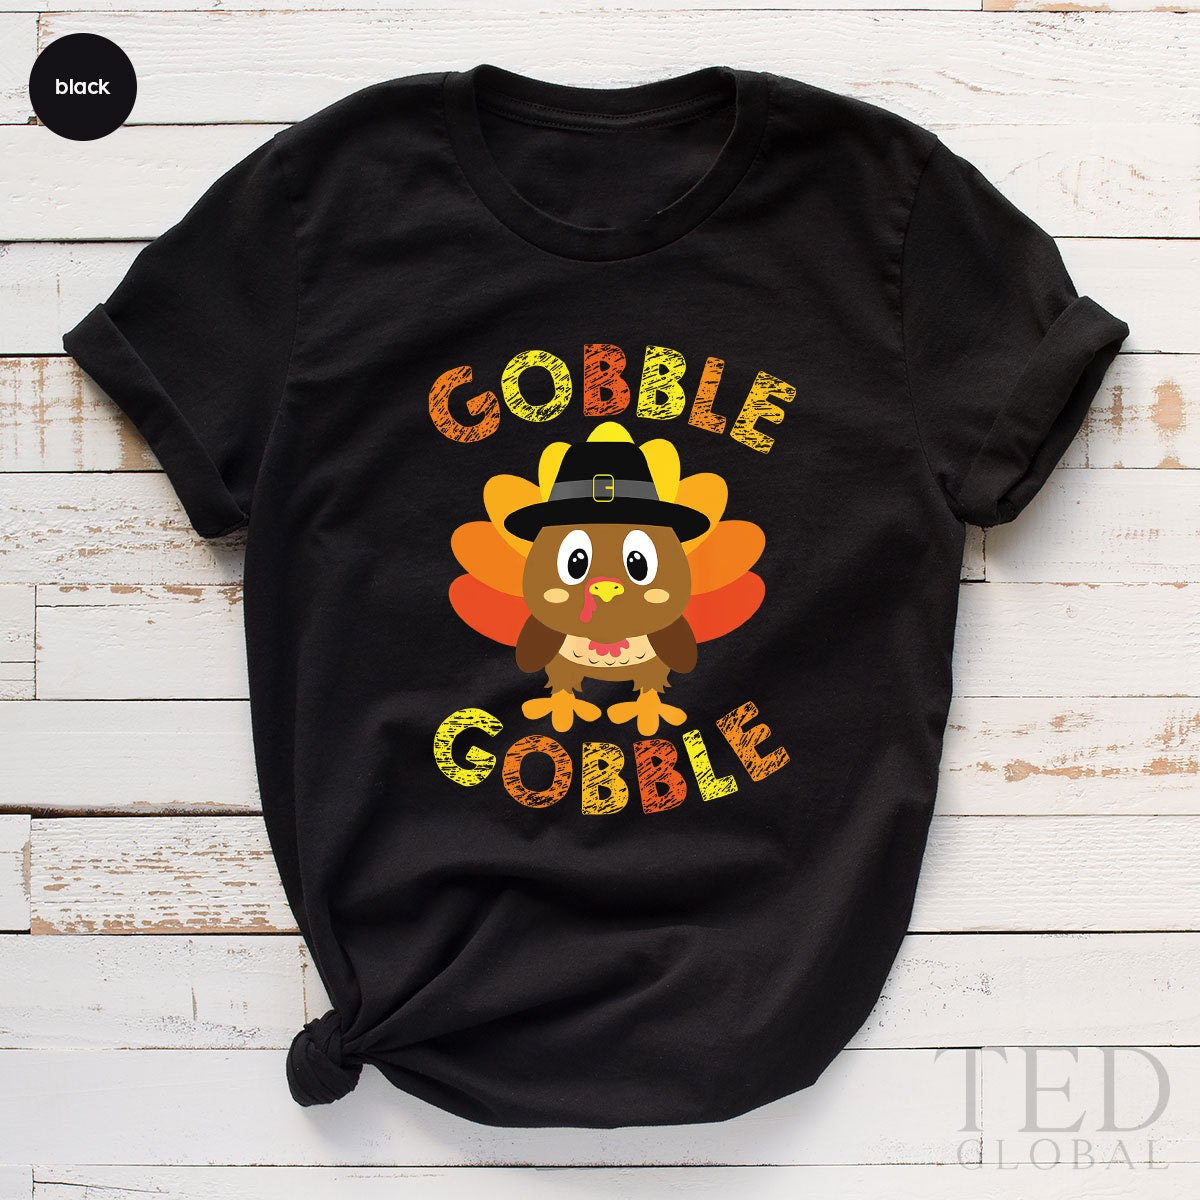 Cute Thanksgiving T-Shirt, Funny Gobble Gobble T Shirt, Family Thanksgiving, Cool Turkey Shirts, Fall Turkey TShirt, Gift For Thanksgiving - Fastdeliverytees.com